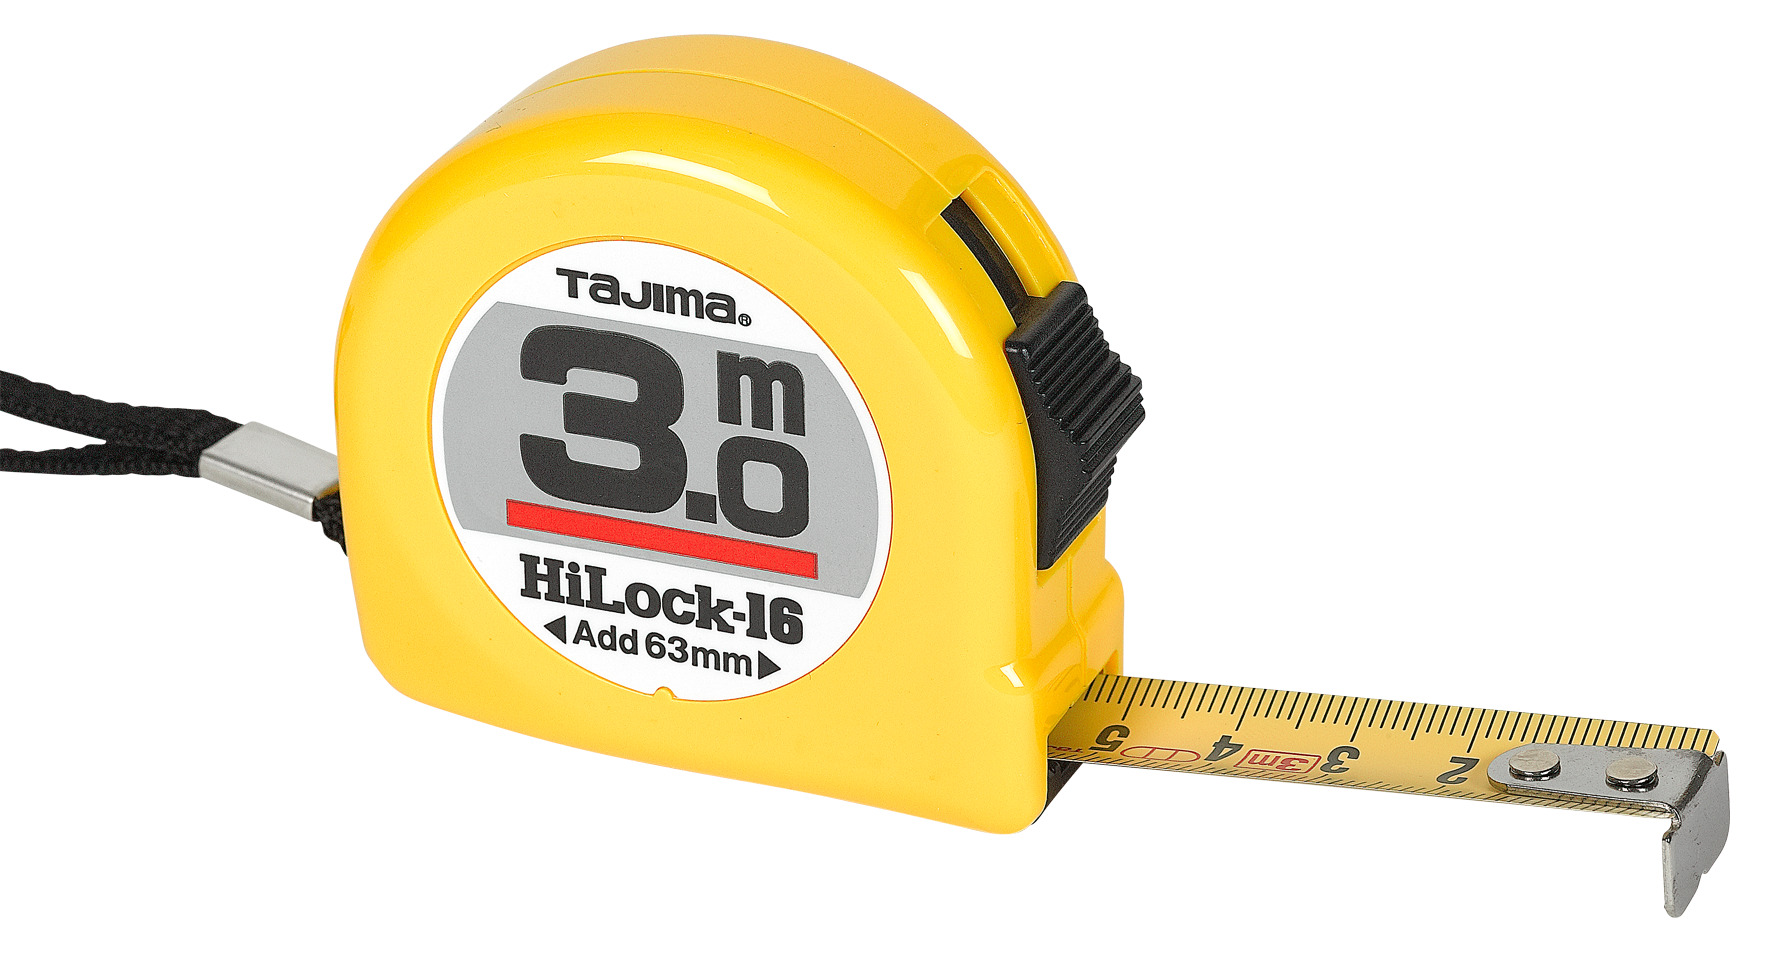 Tajima Hi-Lock Tape Measure 